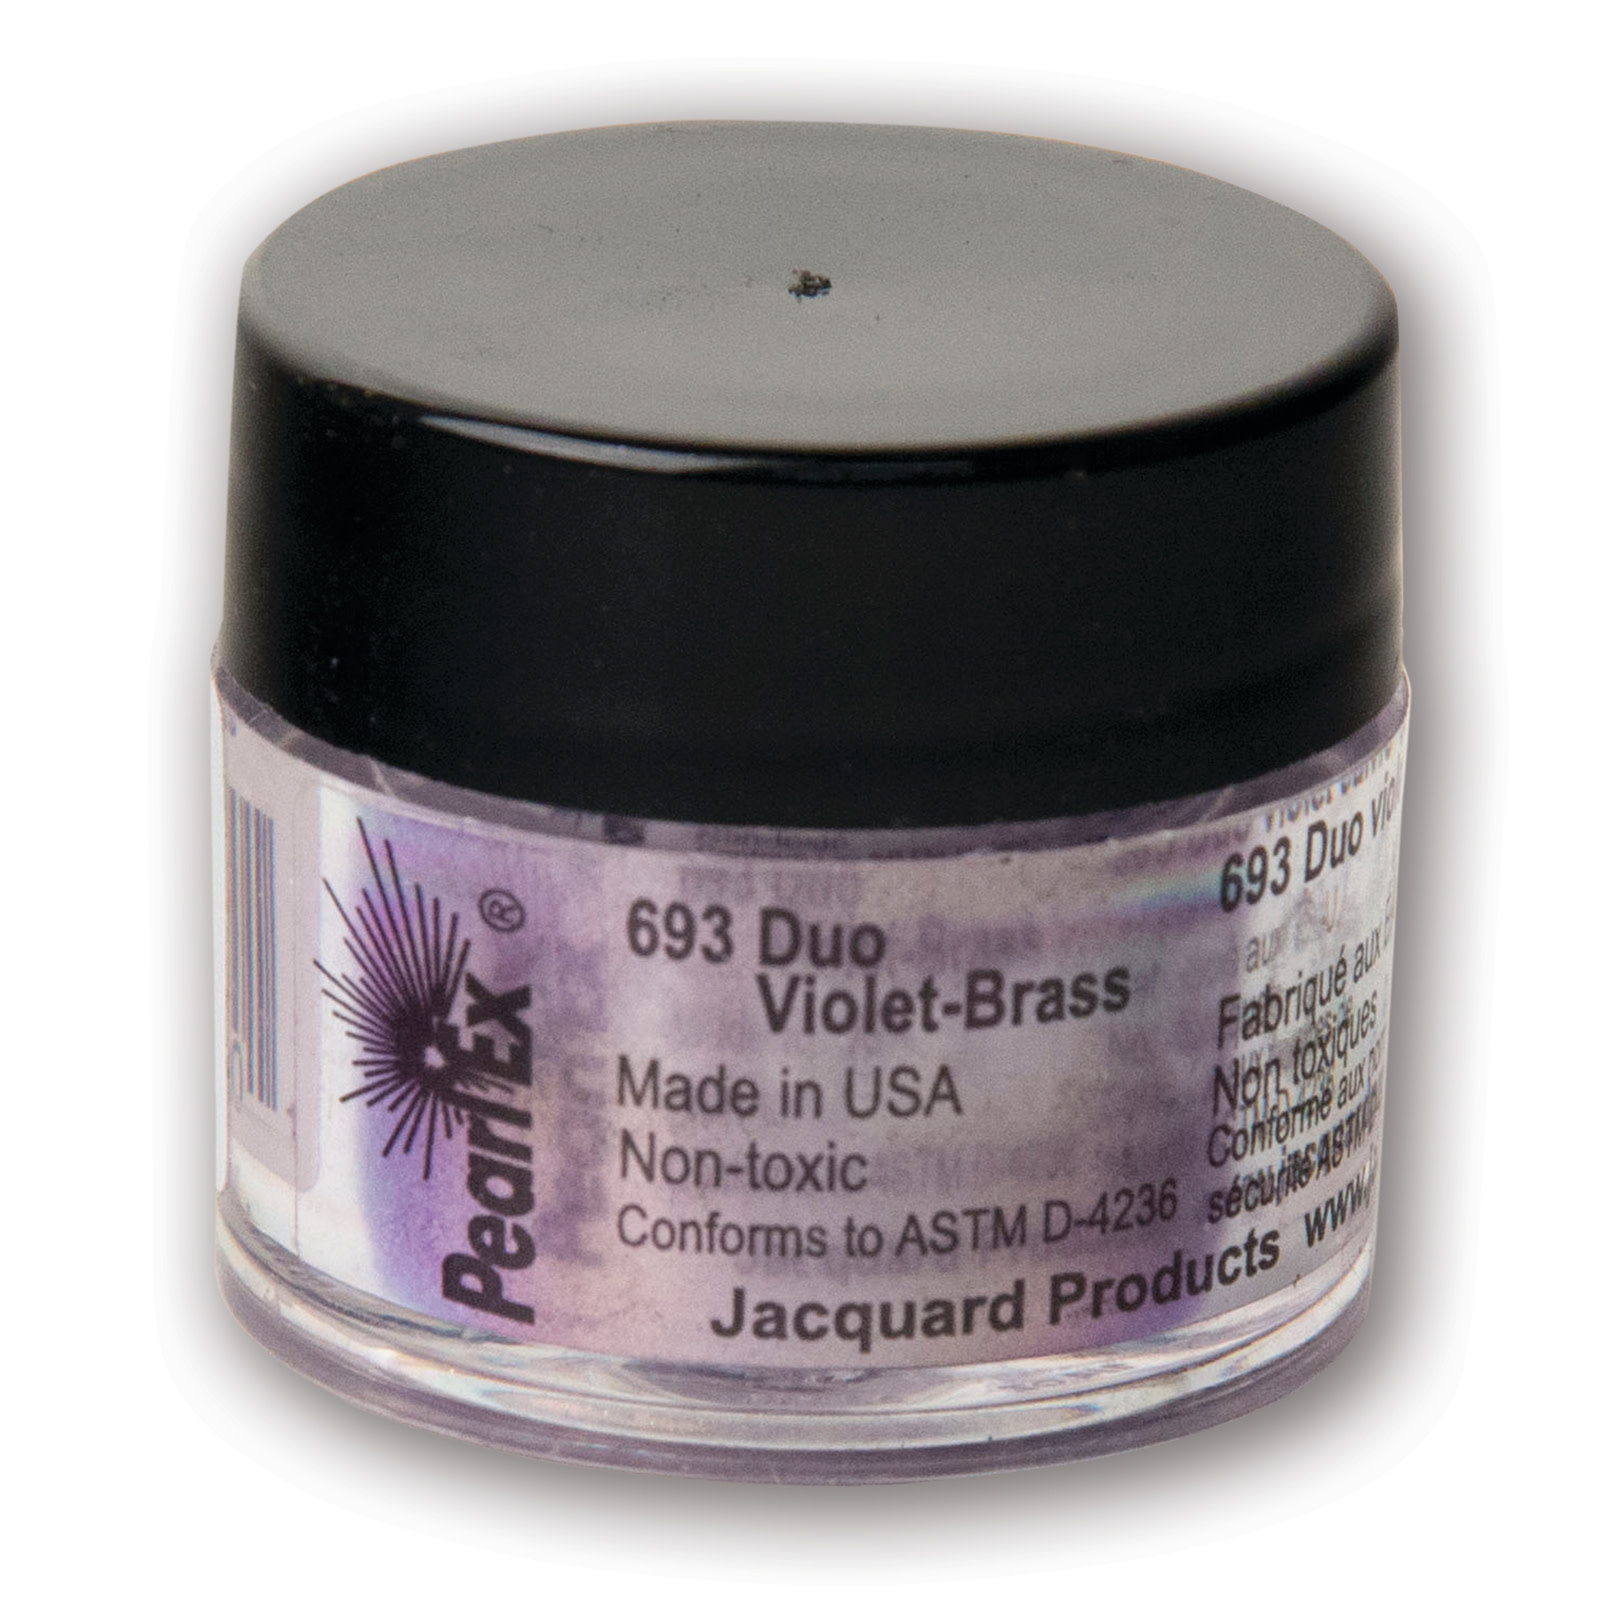 Jacquard Pearl Ex Powdered Pigments, 3g Jars, Duo Violet-Brass